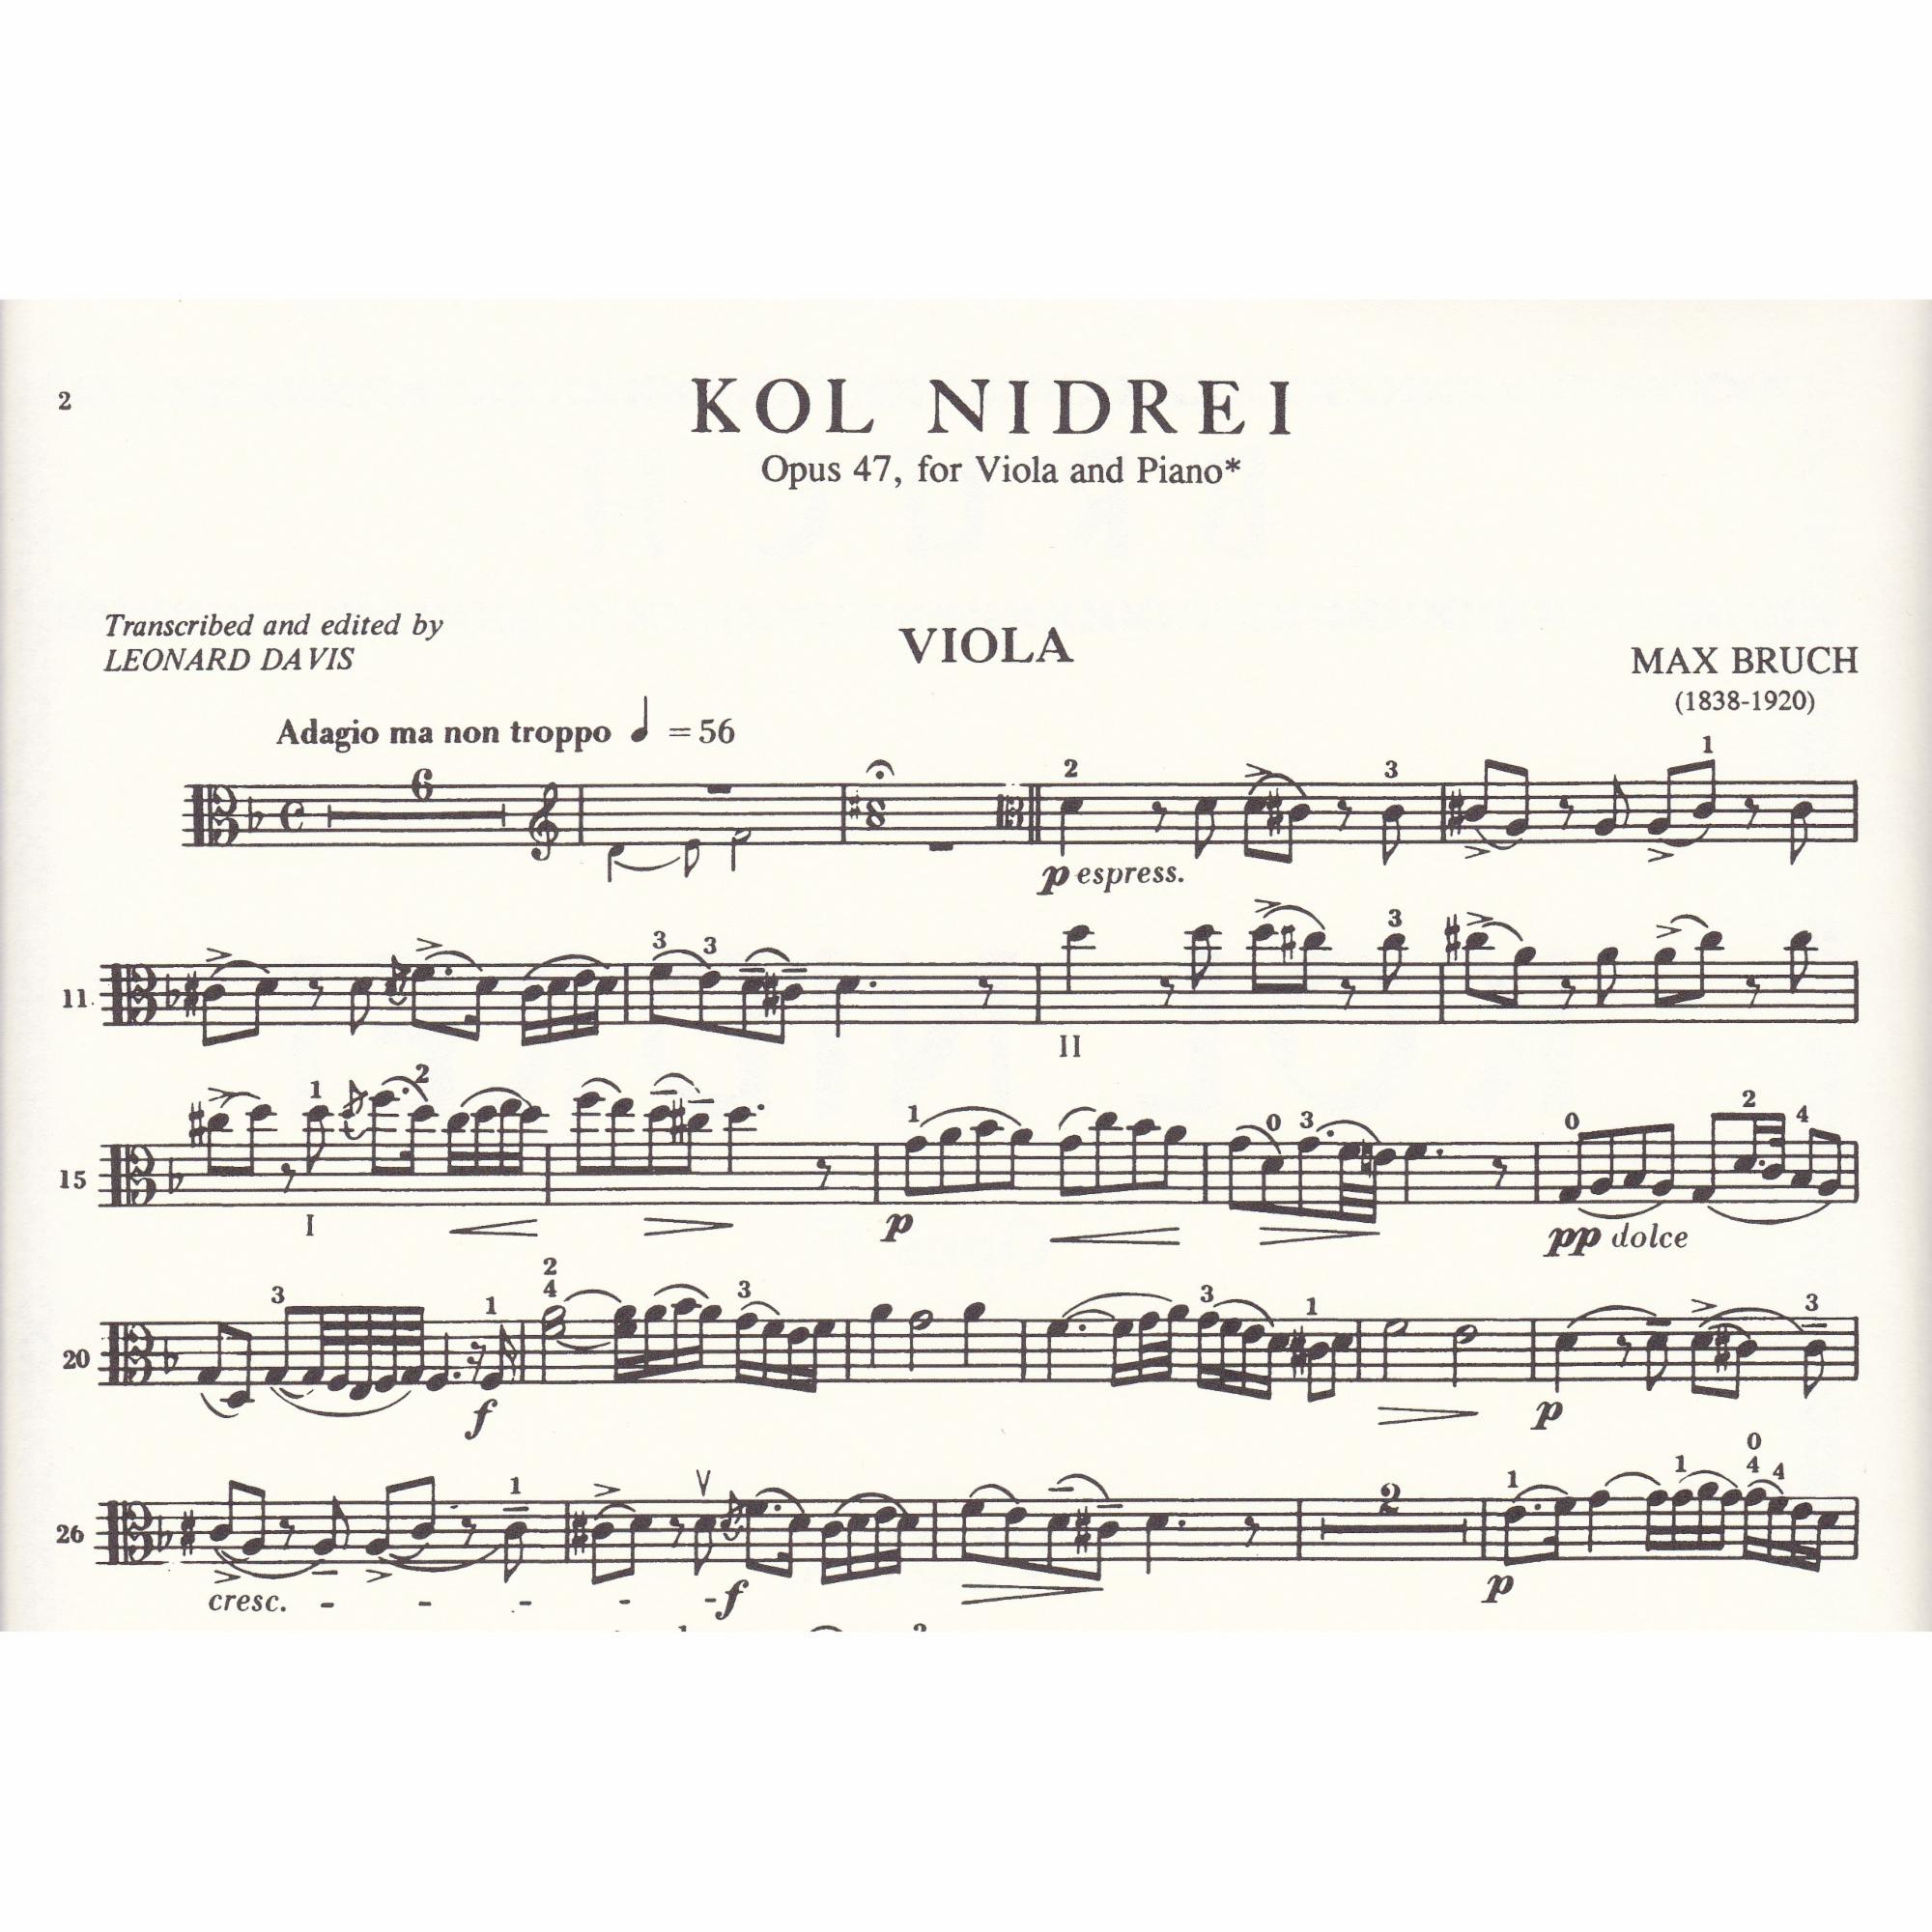 Kol Nidrei for Viola and Piano, Op. 47